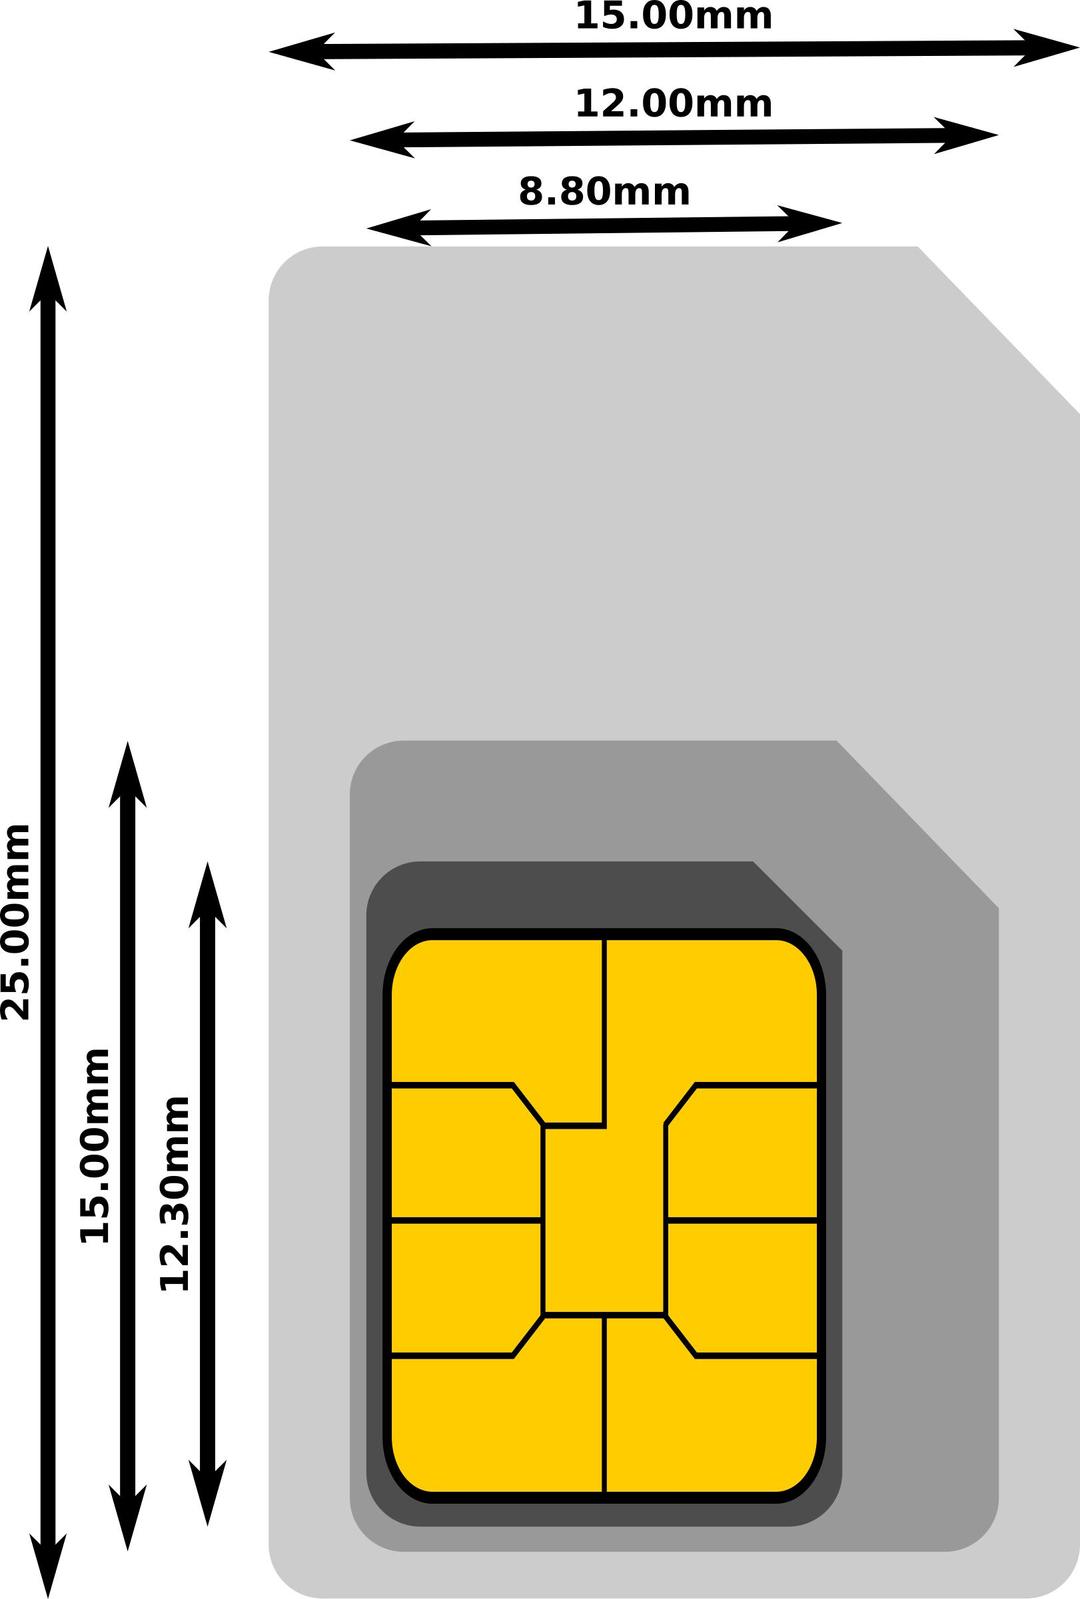 Cellular Sim Card Estimated Dimensions png transparent